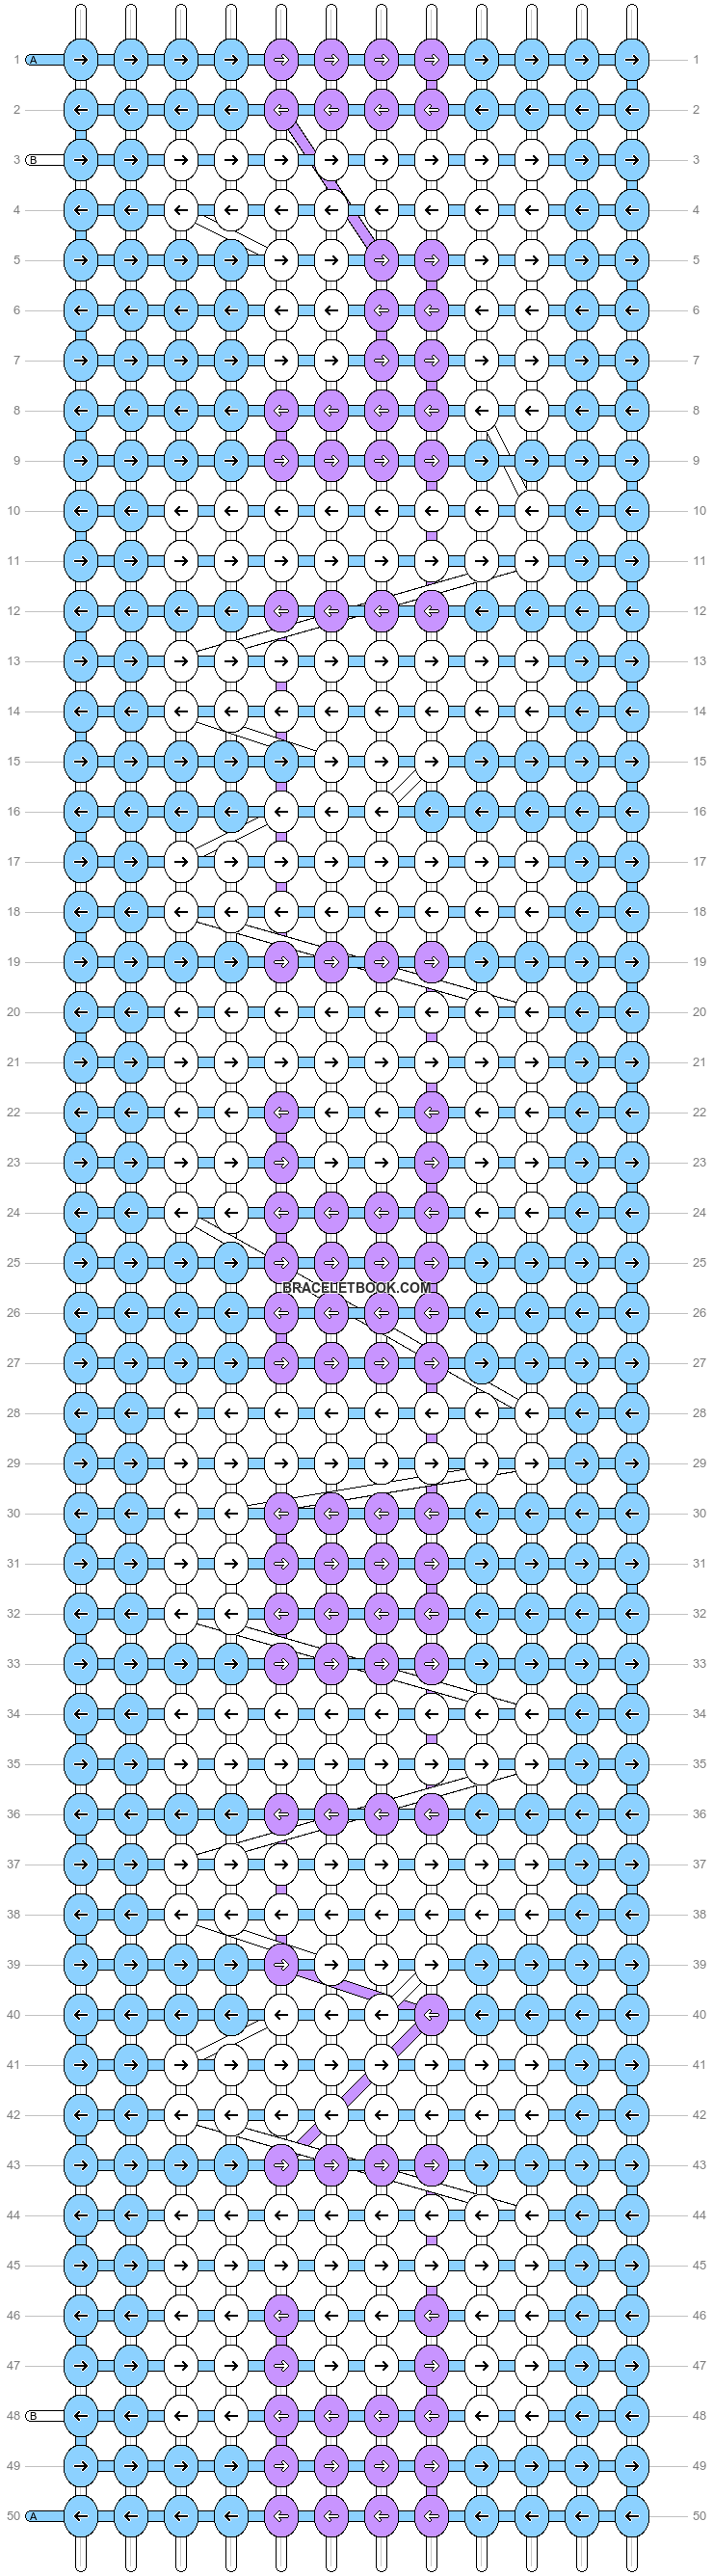 Alpha pattern #38689 variation #44621 pattern